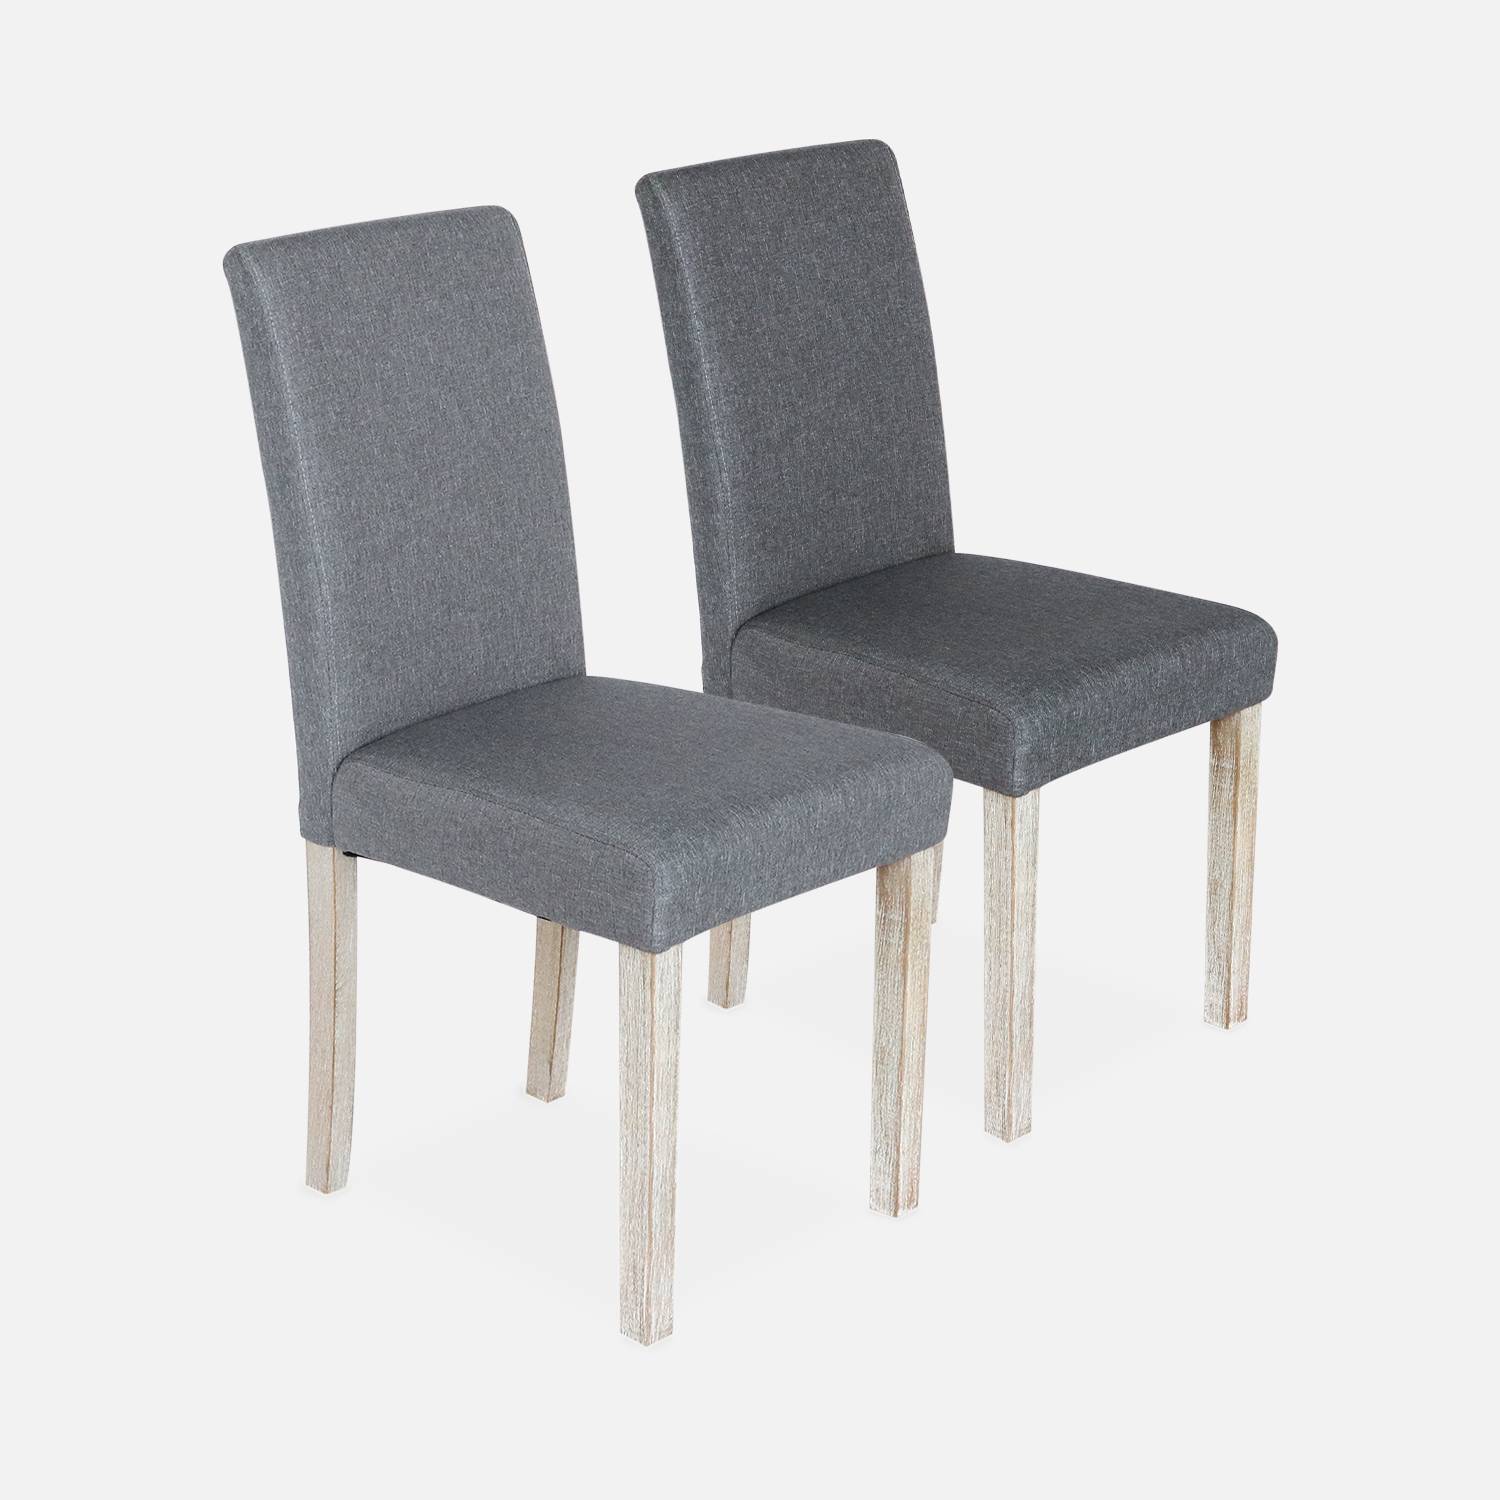 Set van 2 stoelen - stoffen stoelen, houten loodwitte poten  Photo6